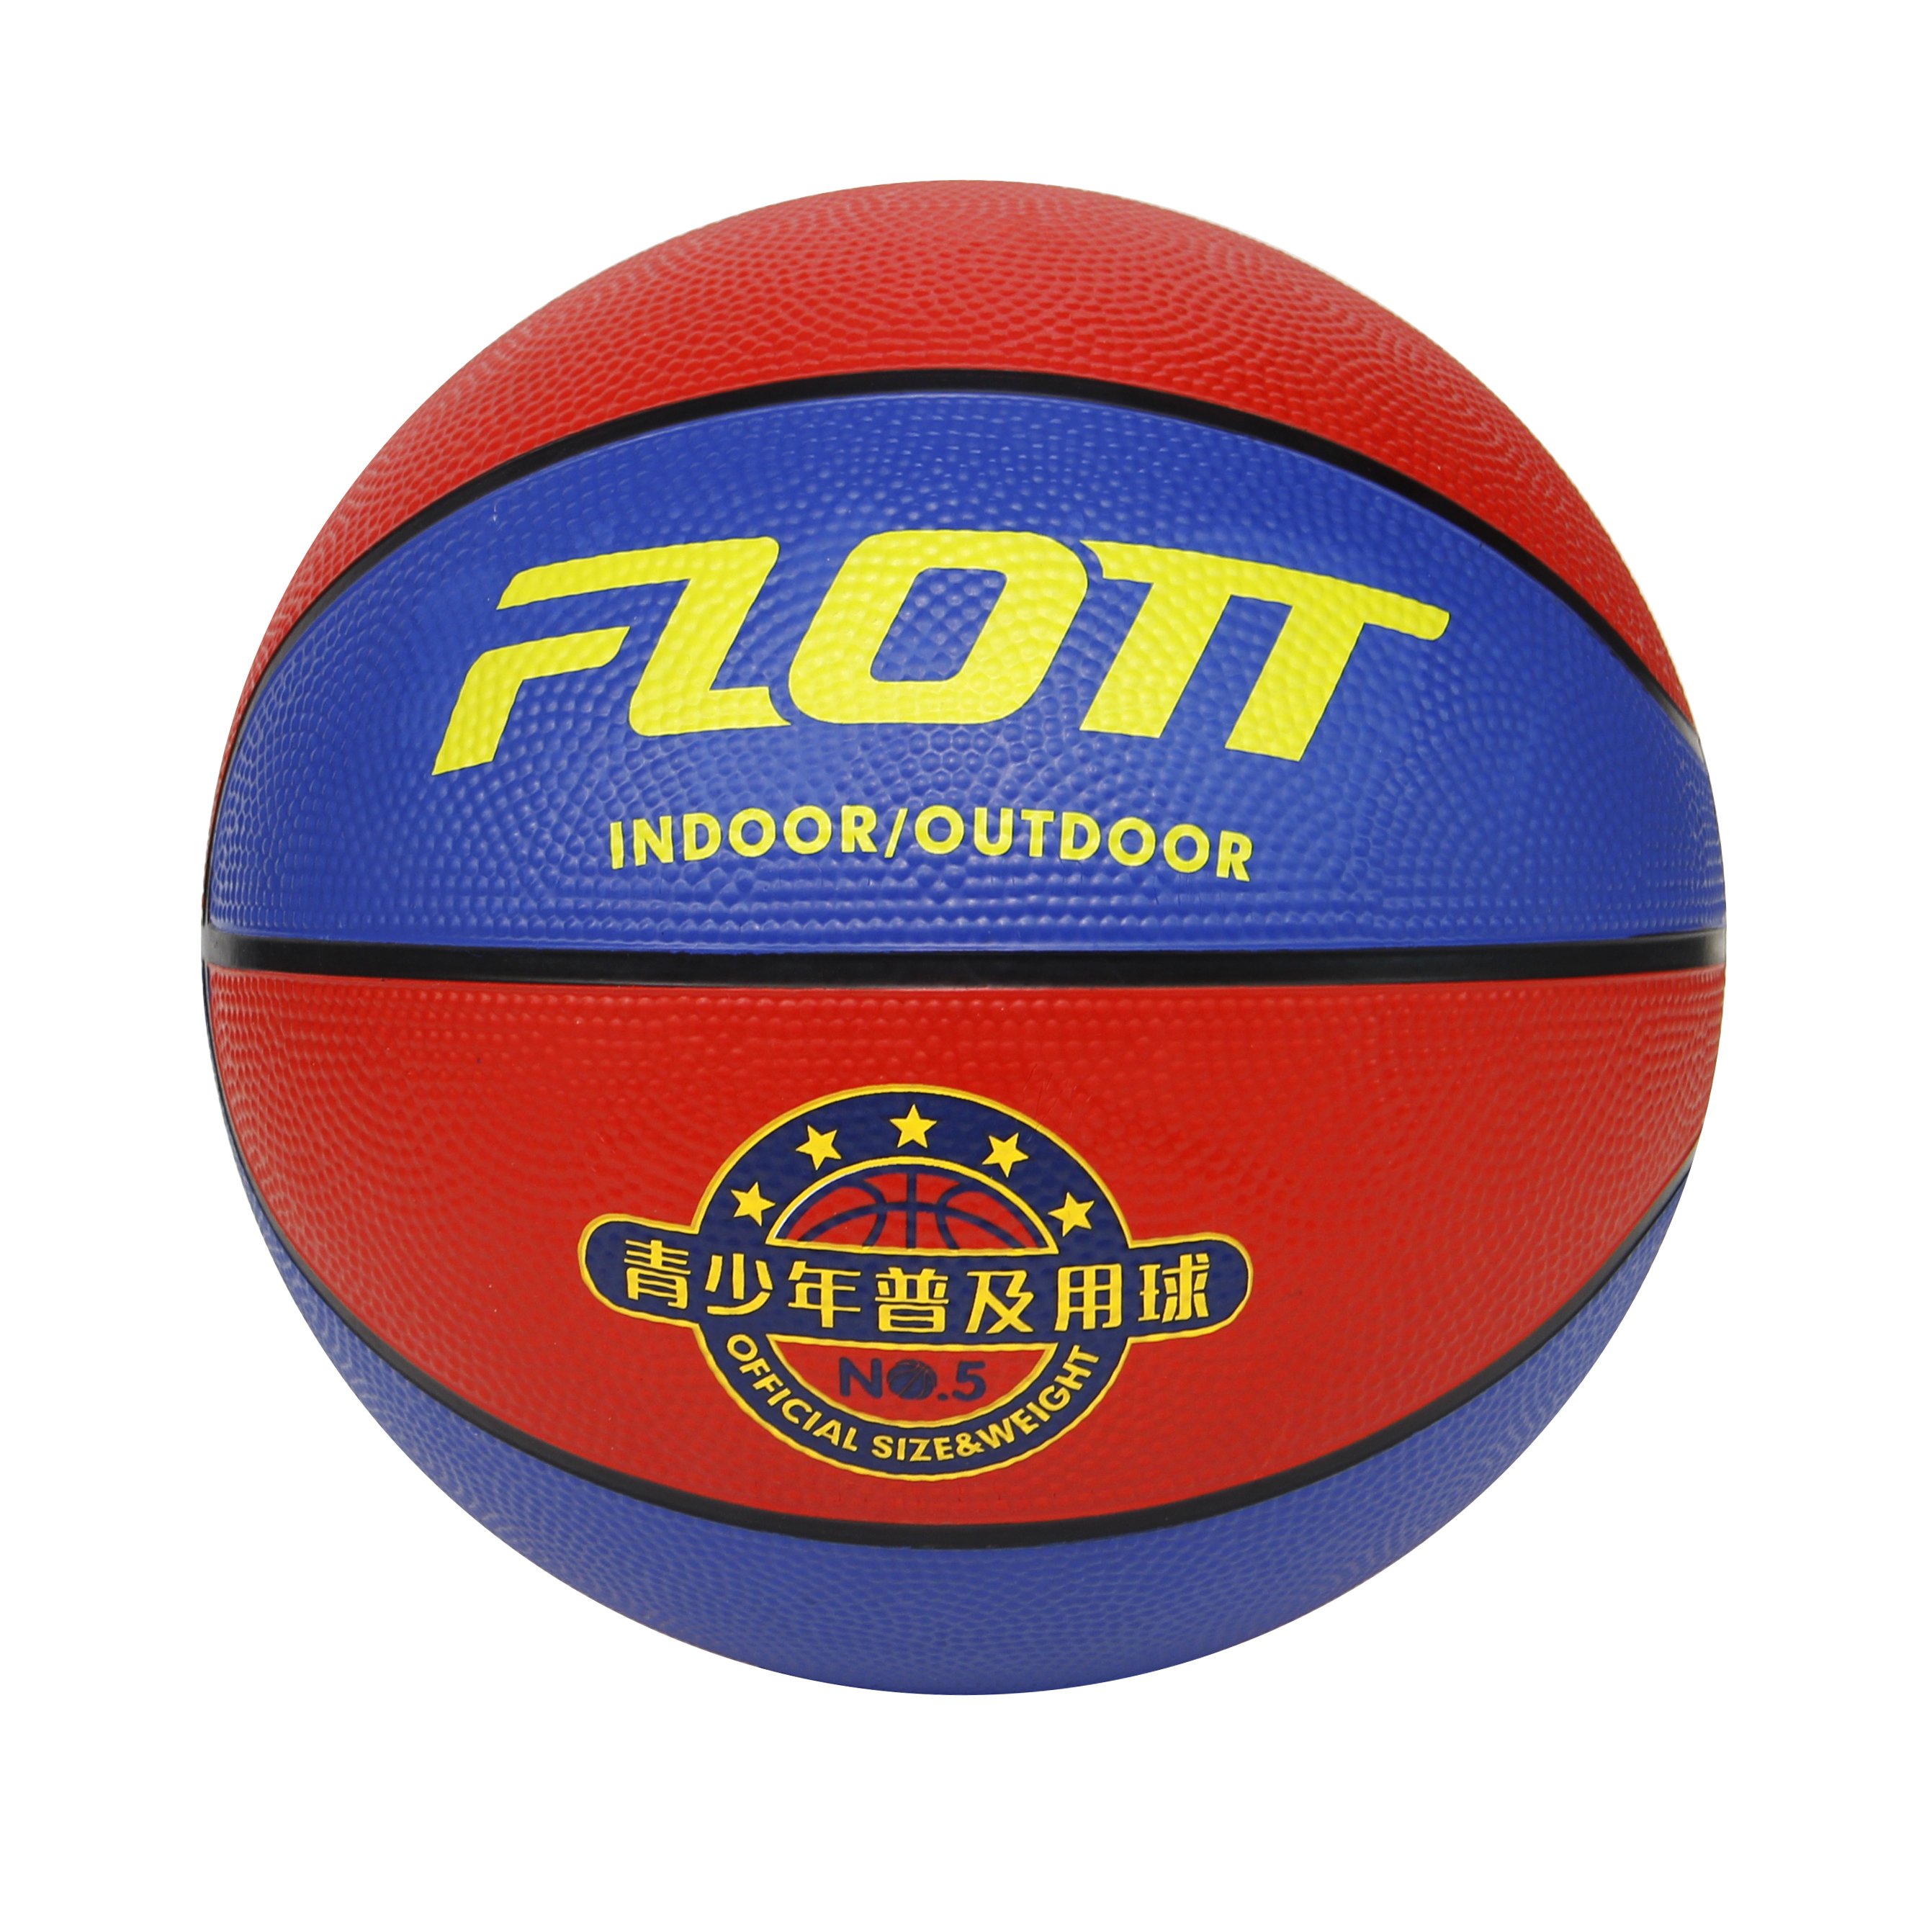 FBA-0085  FLOTT Size 5 Rubber Basketball 